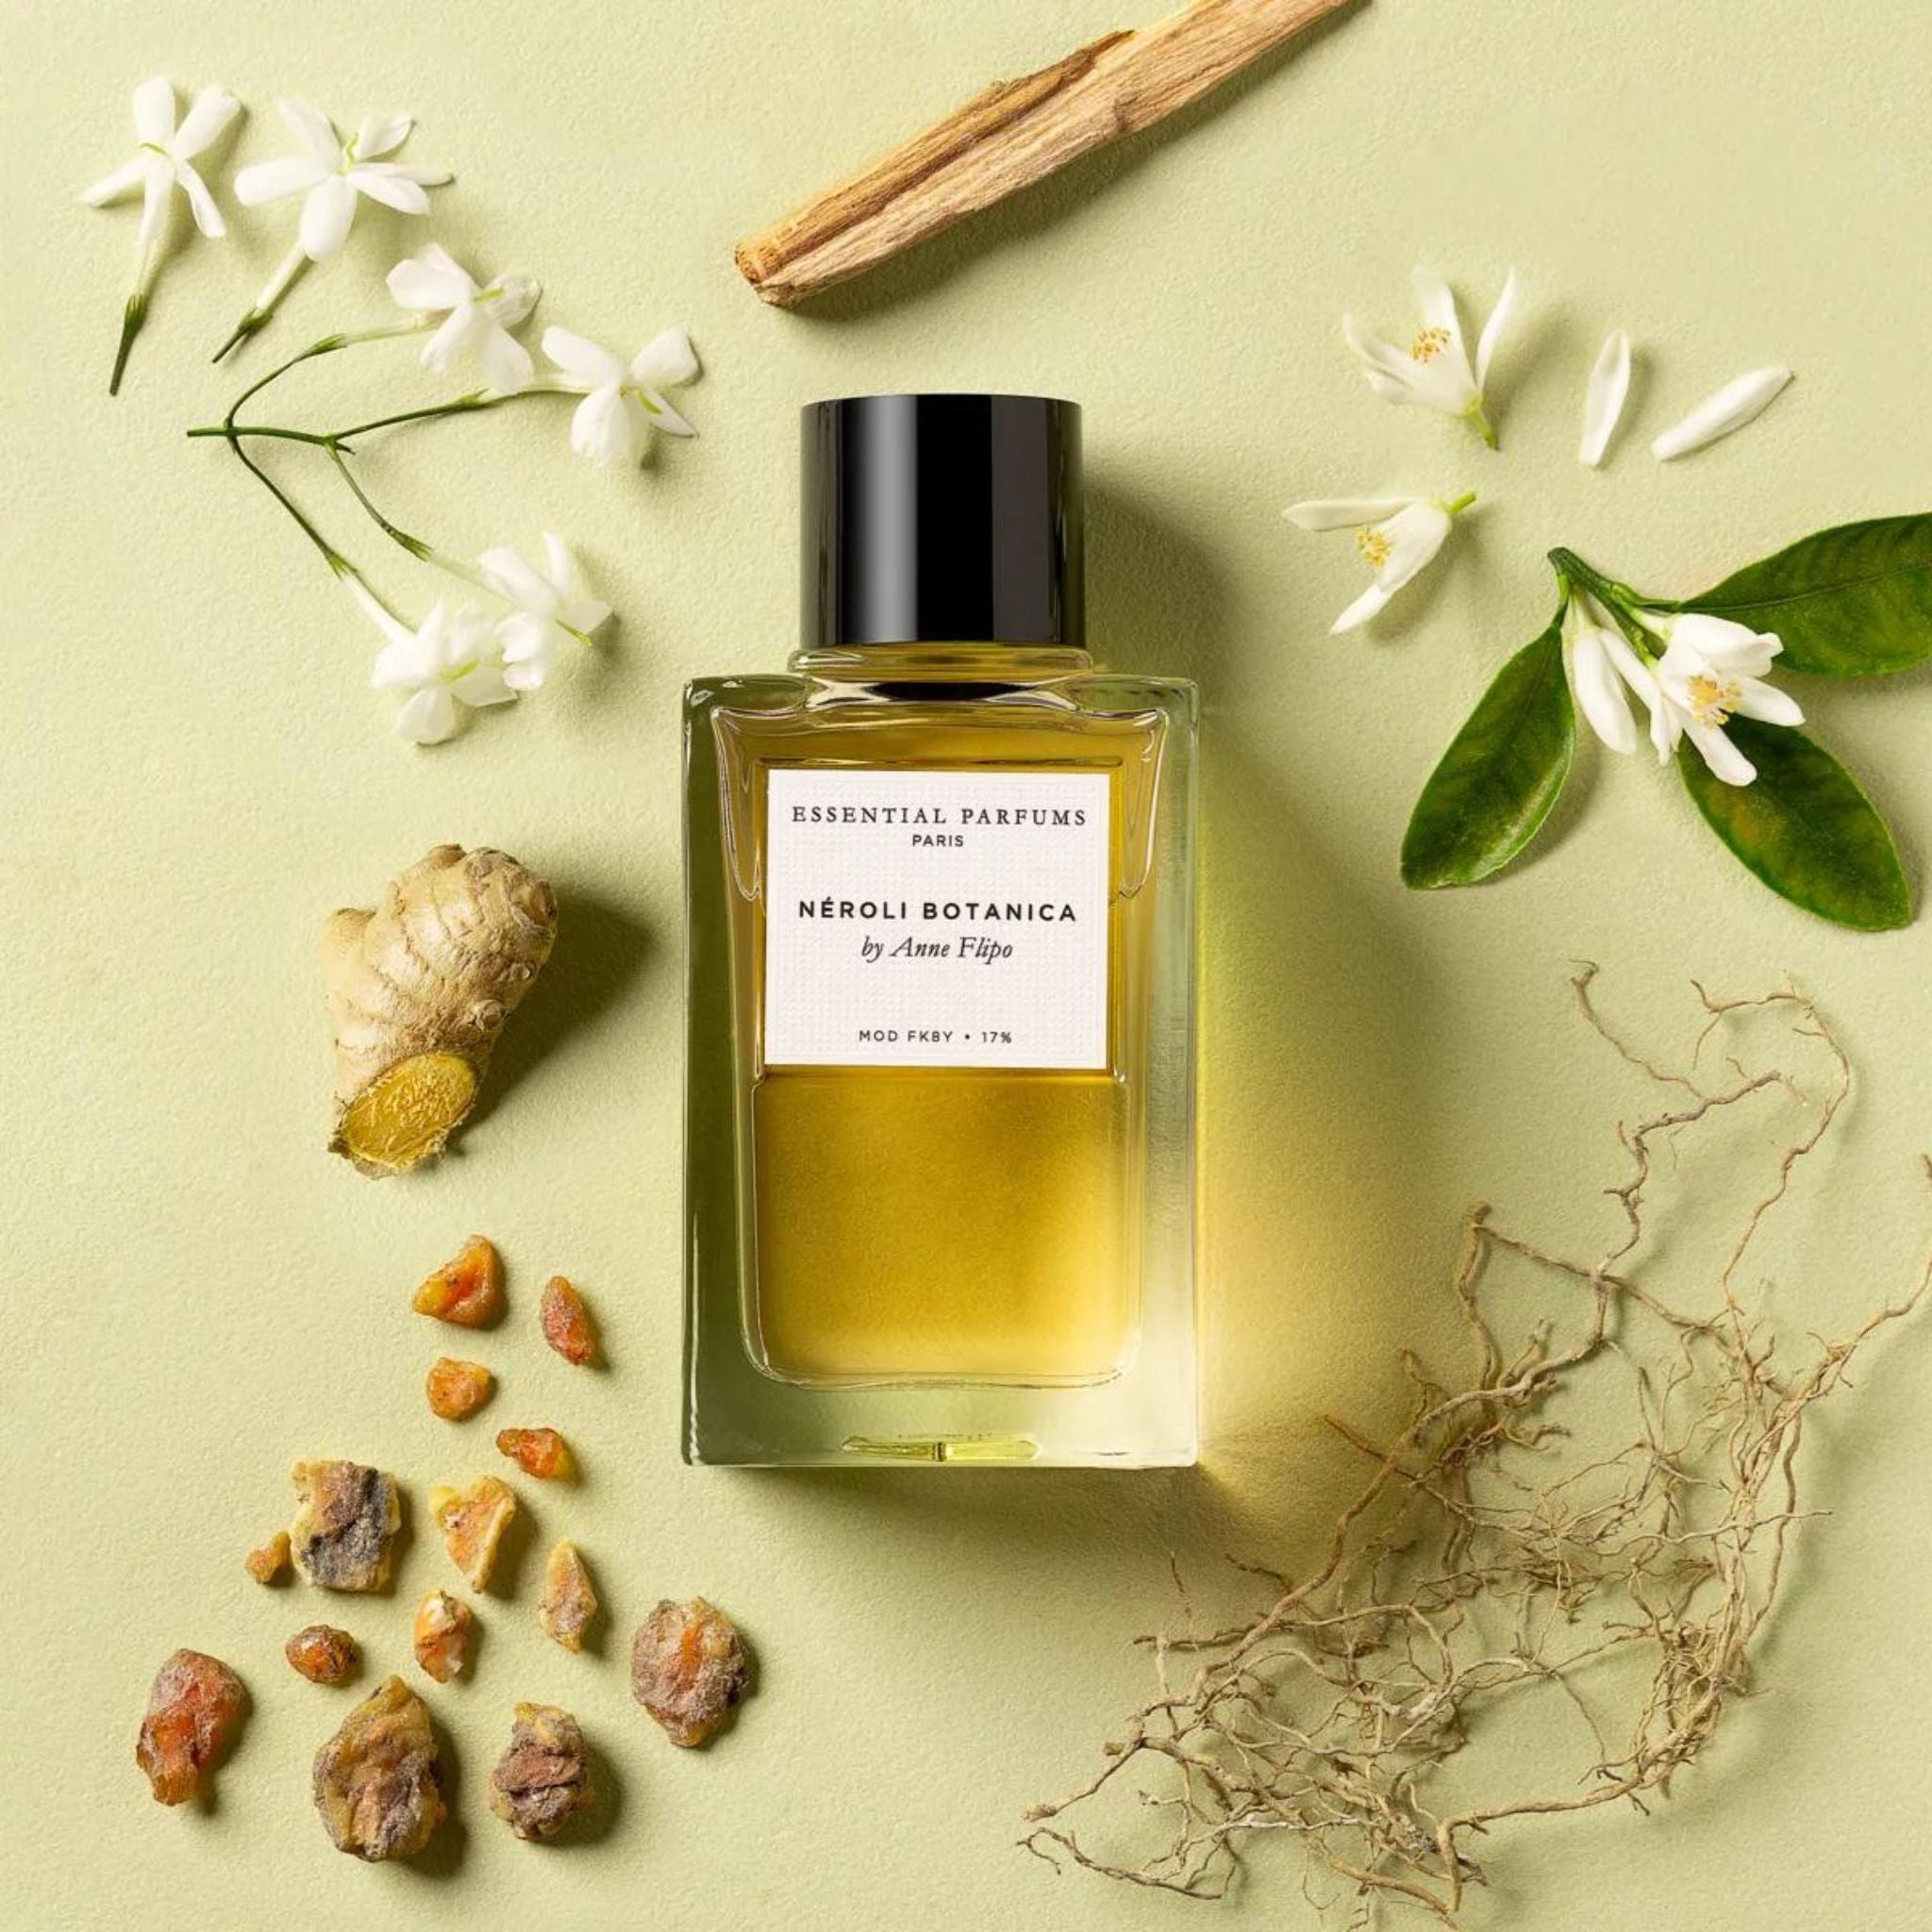 Essential Parfums Neroli Botanica